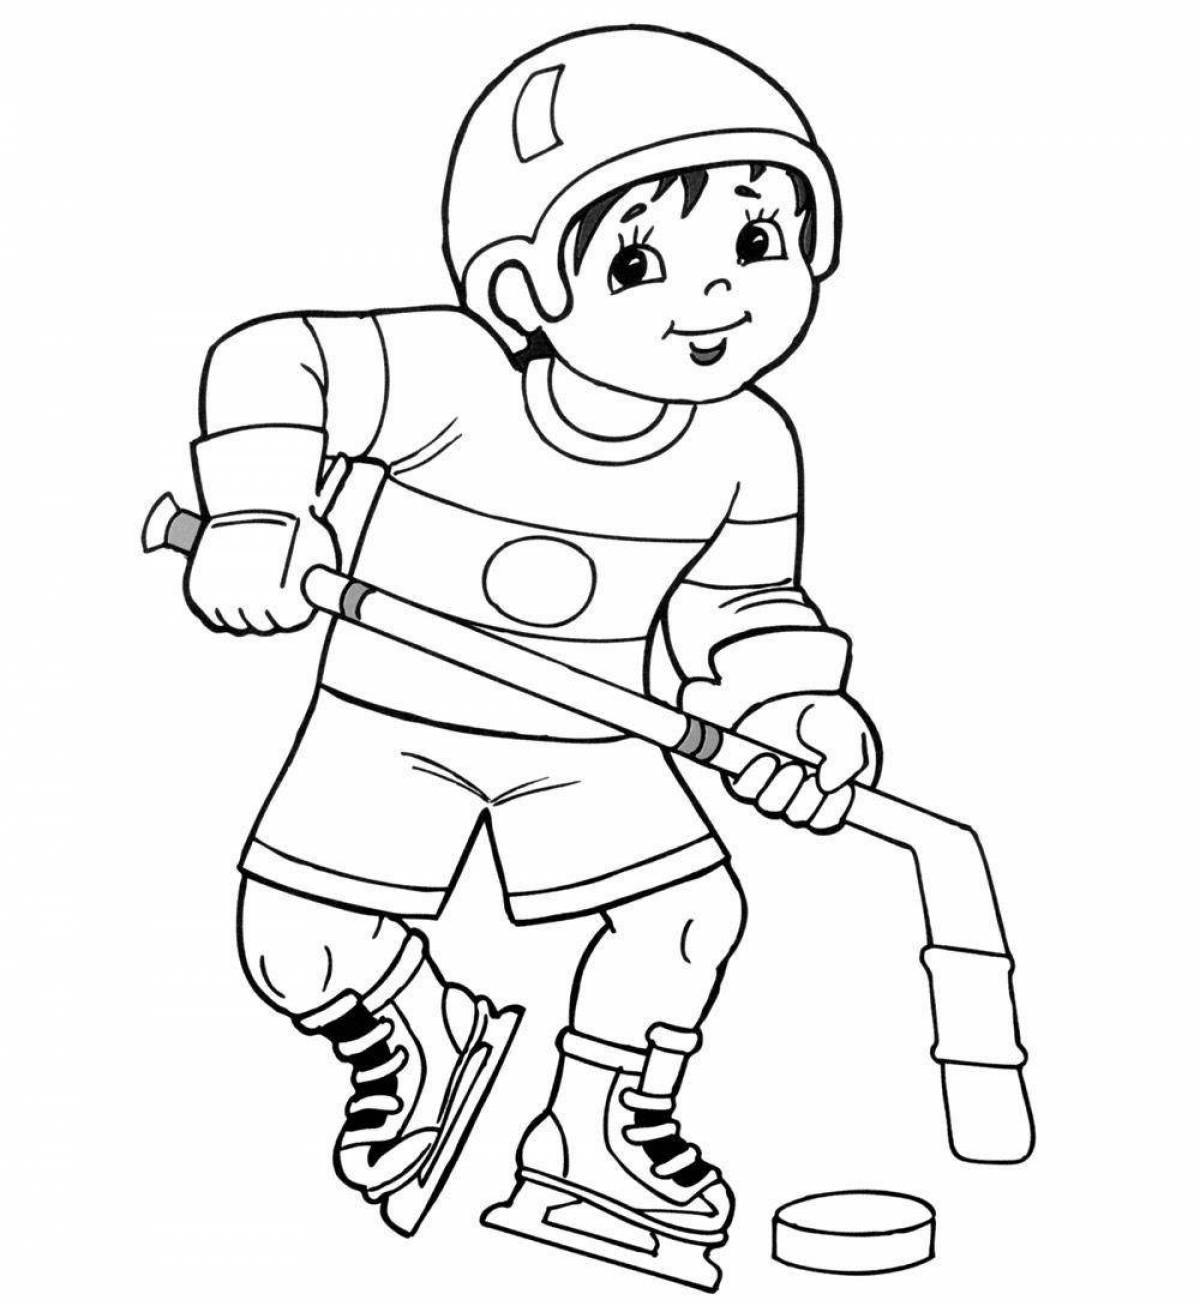 Joyful winter sports coloring book for preschoolers